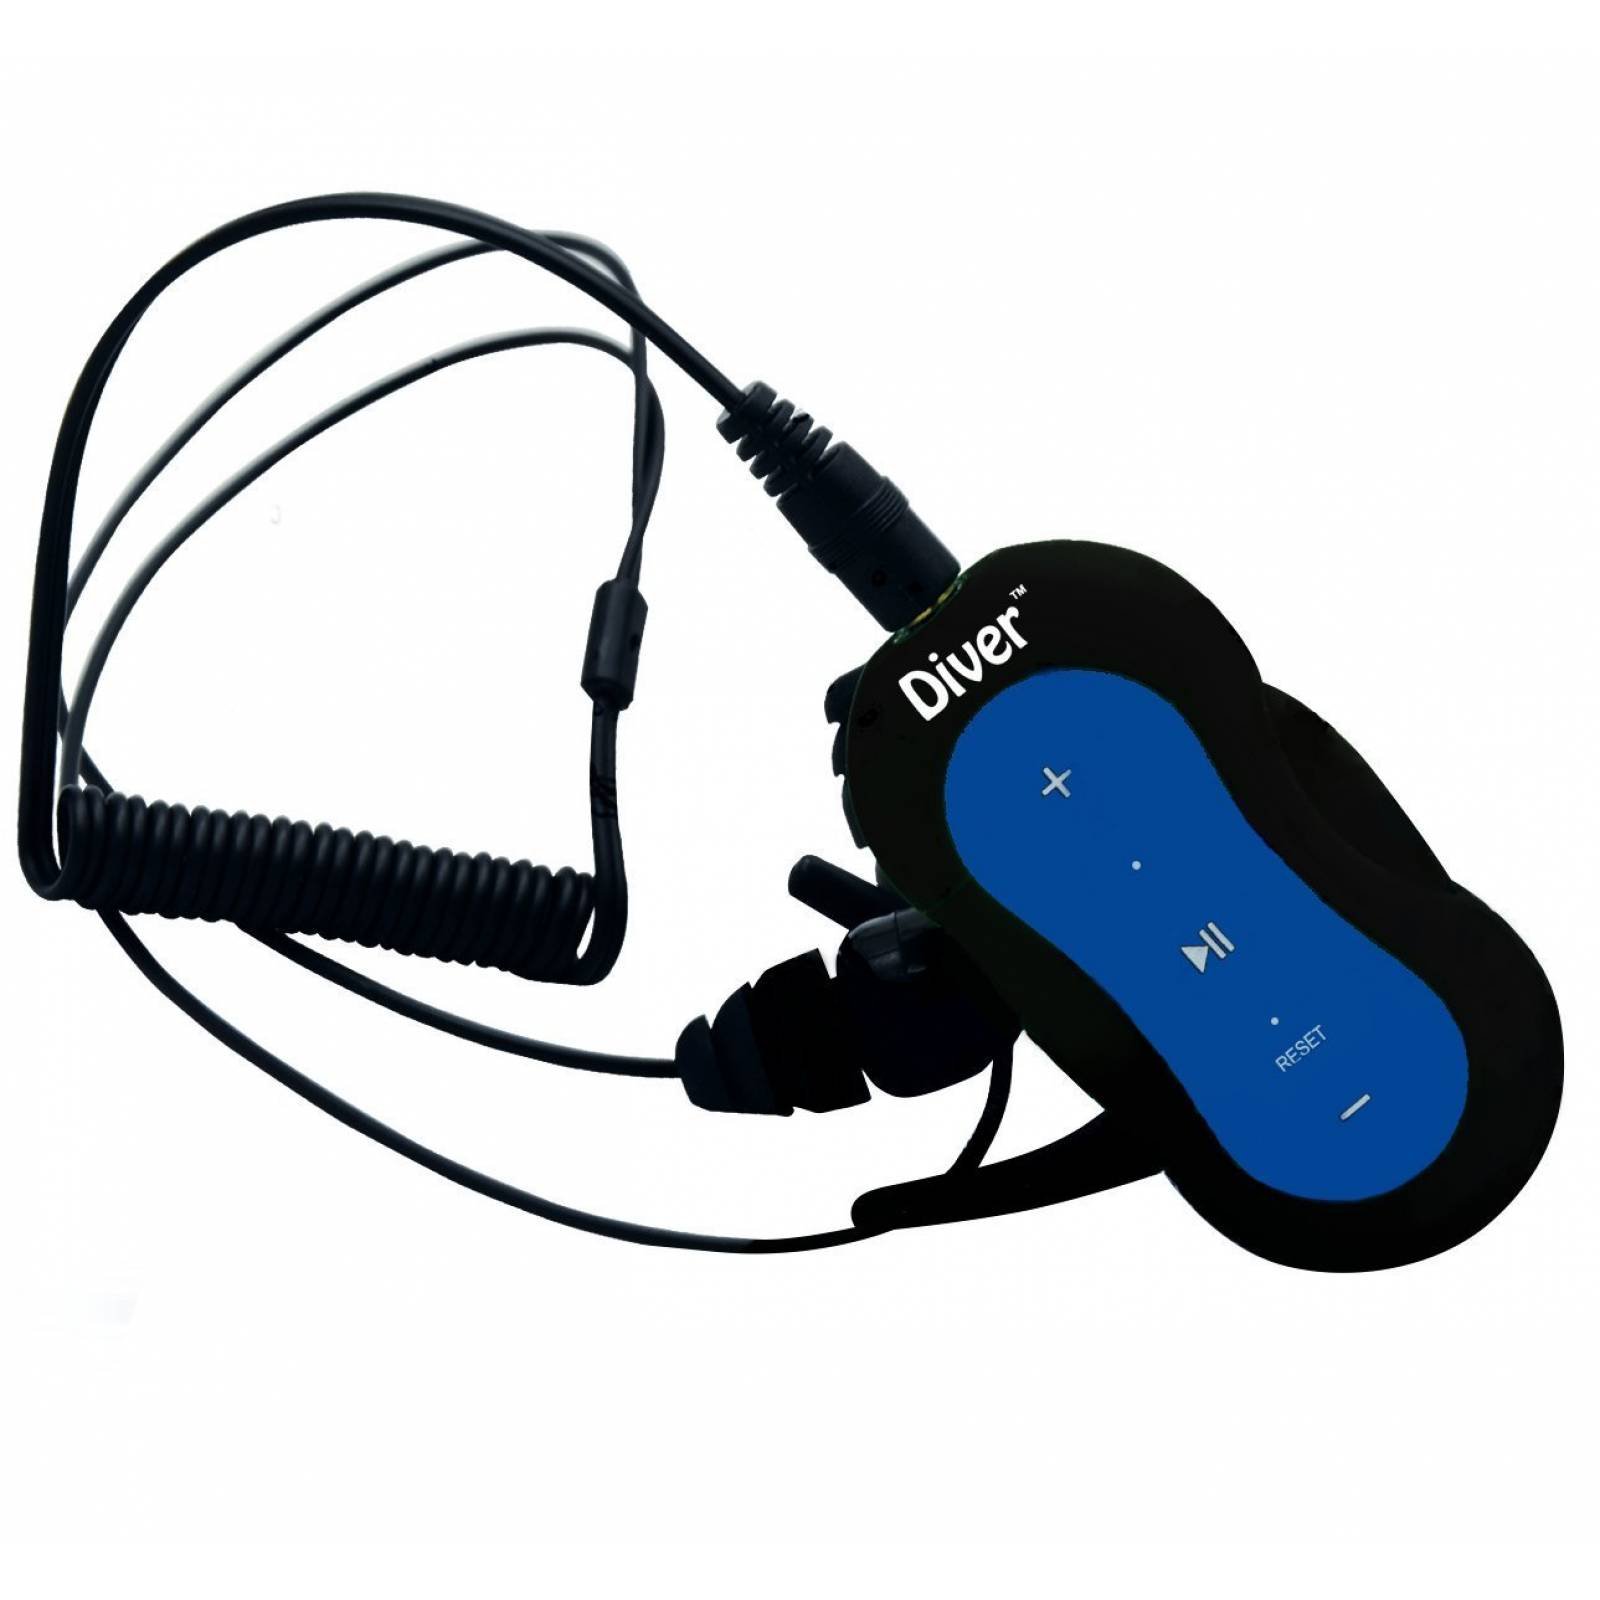 Buzo 10 DB 4GB Reproductor MP3 impermeable auriculares -Azul